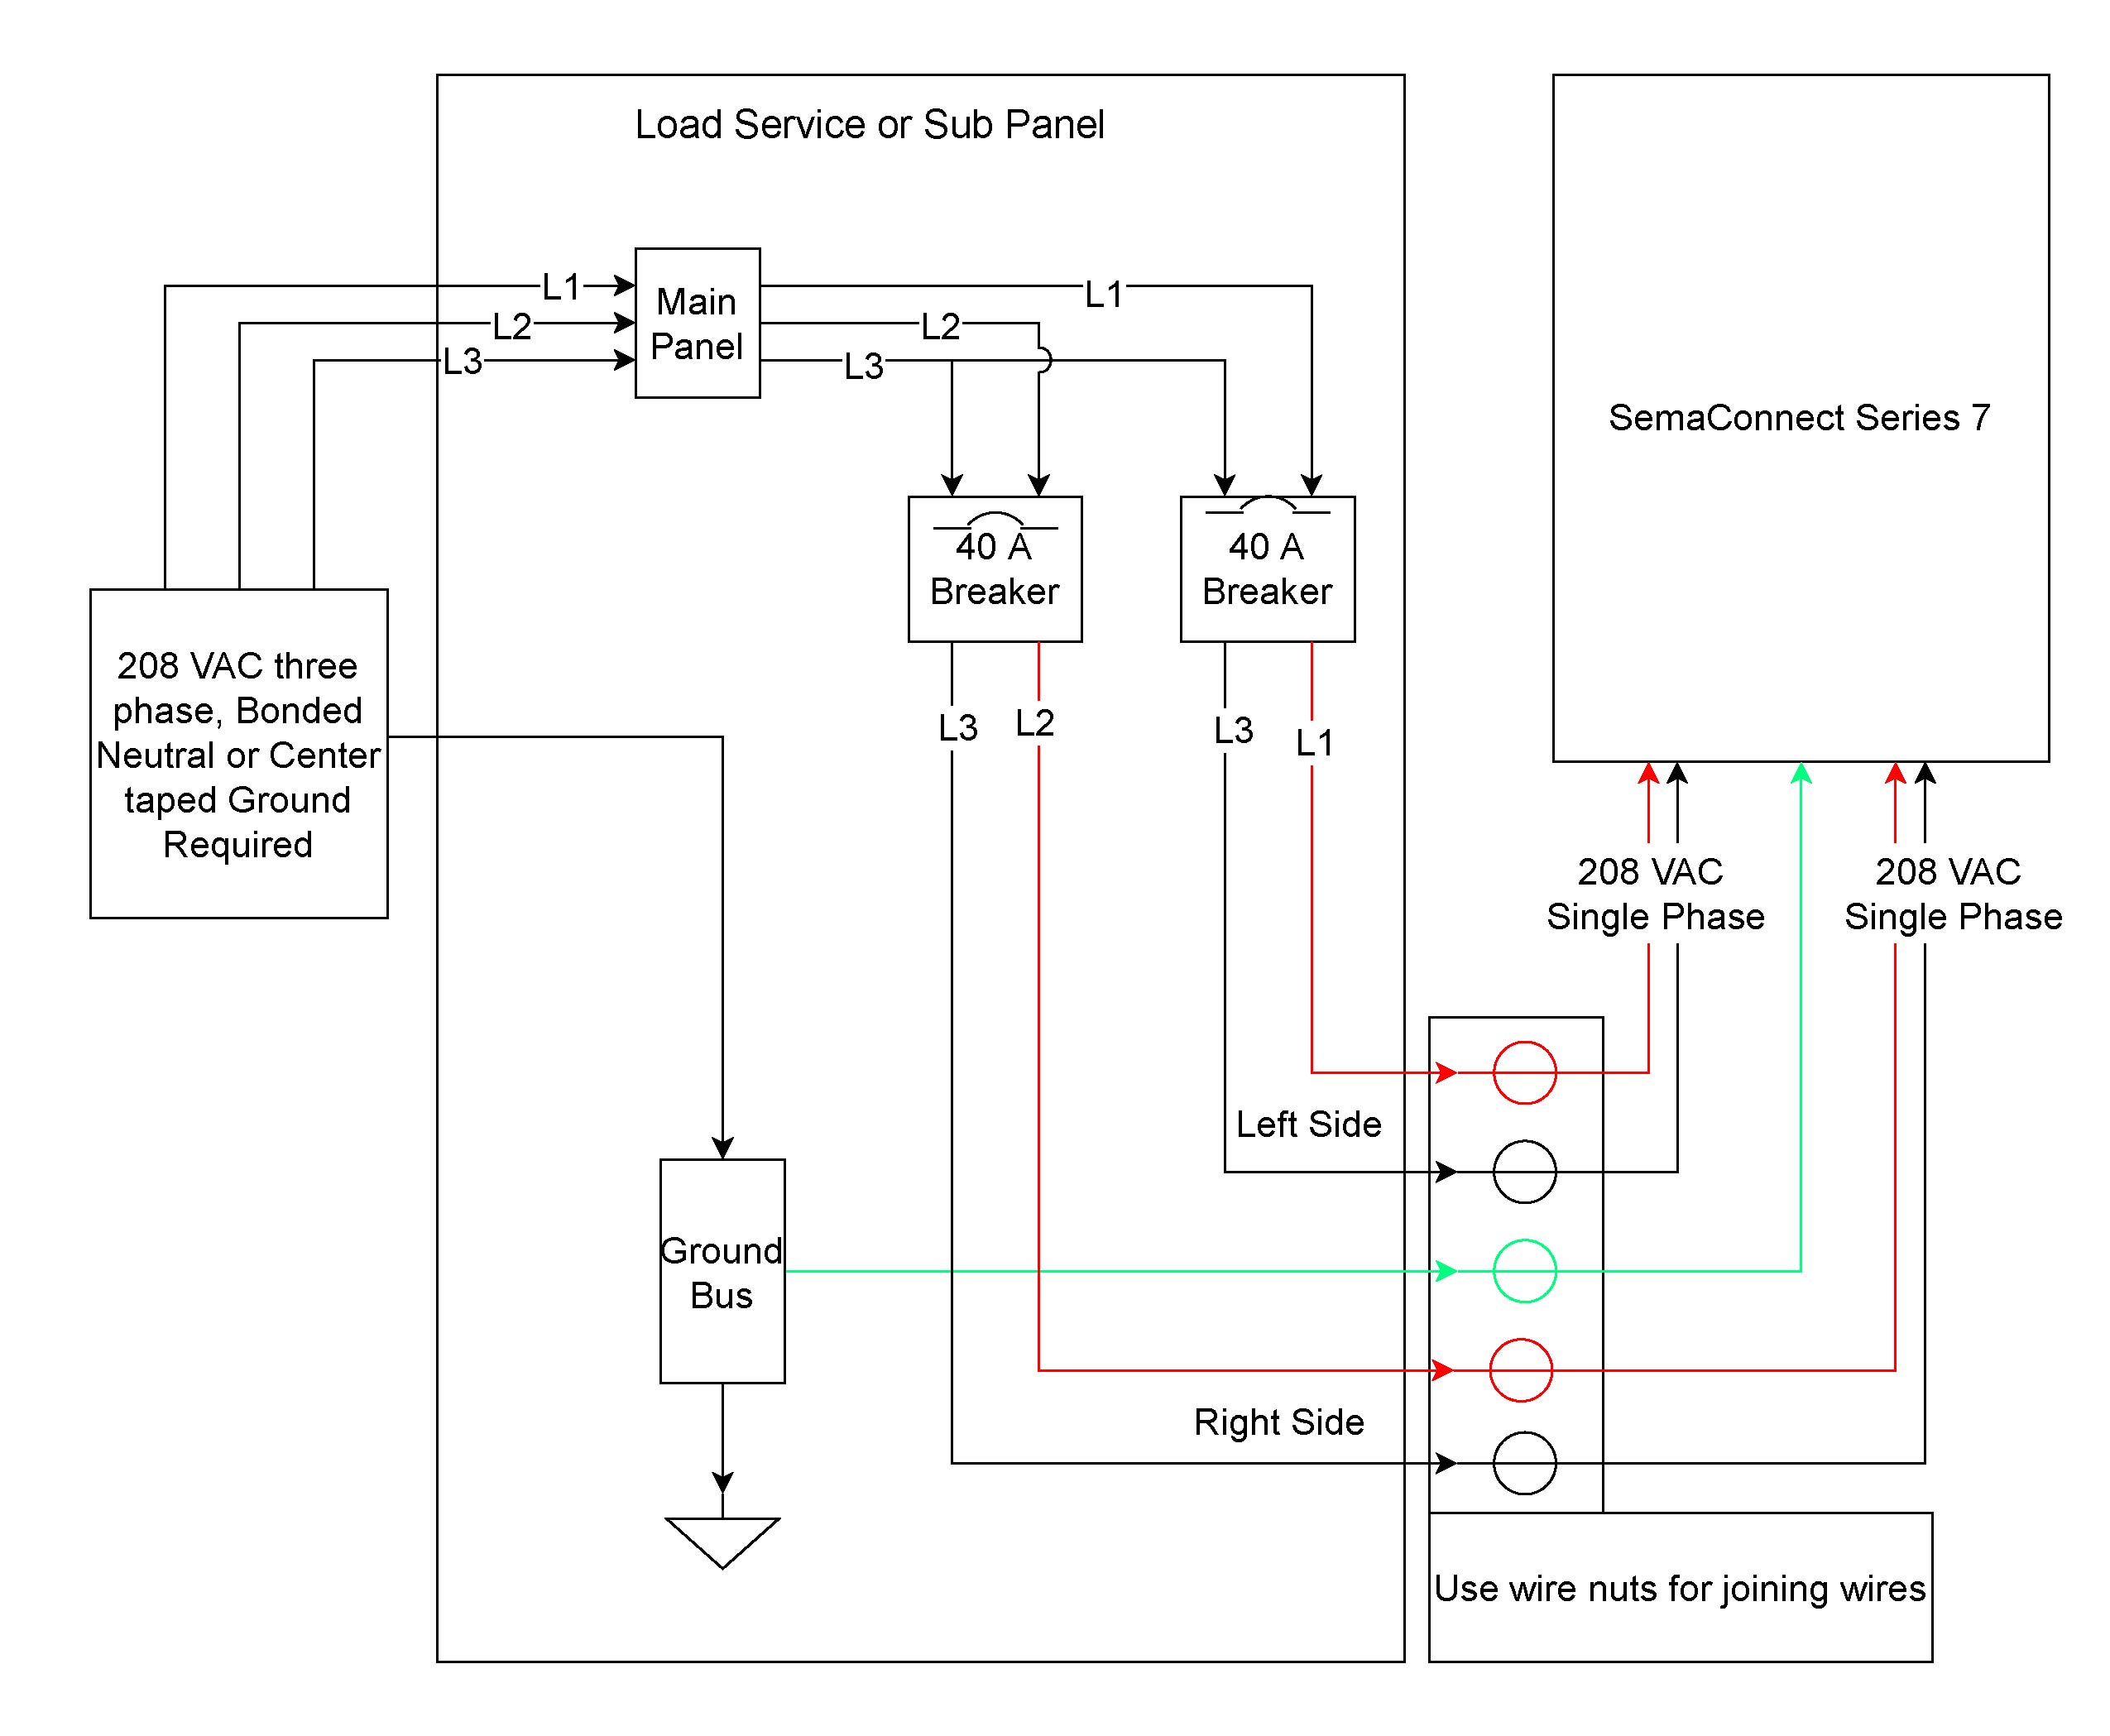 l17-30 wiring diagram